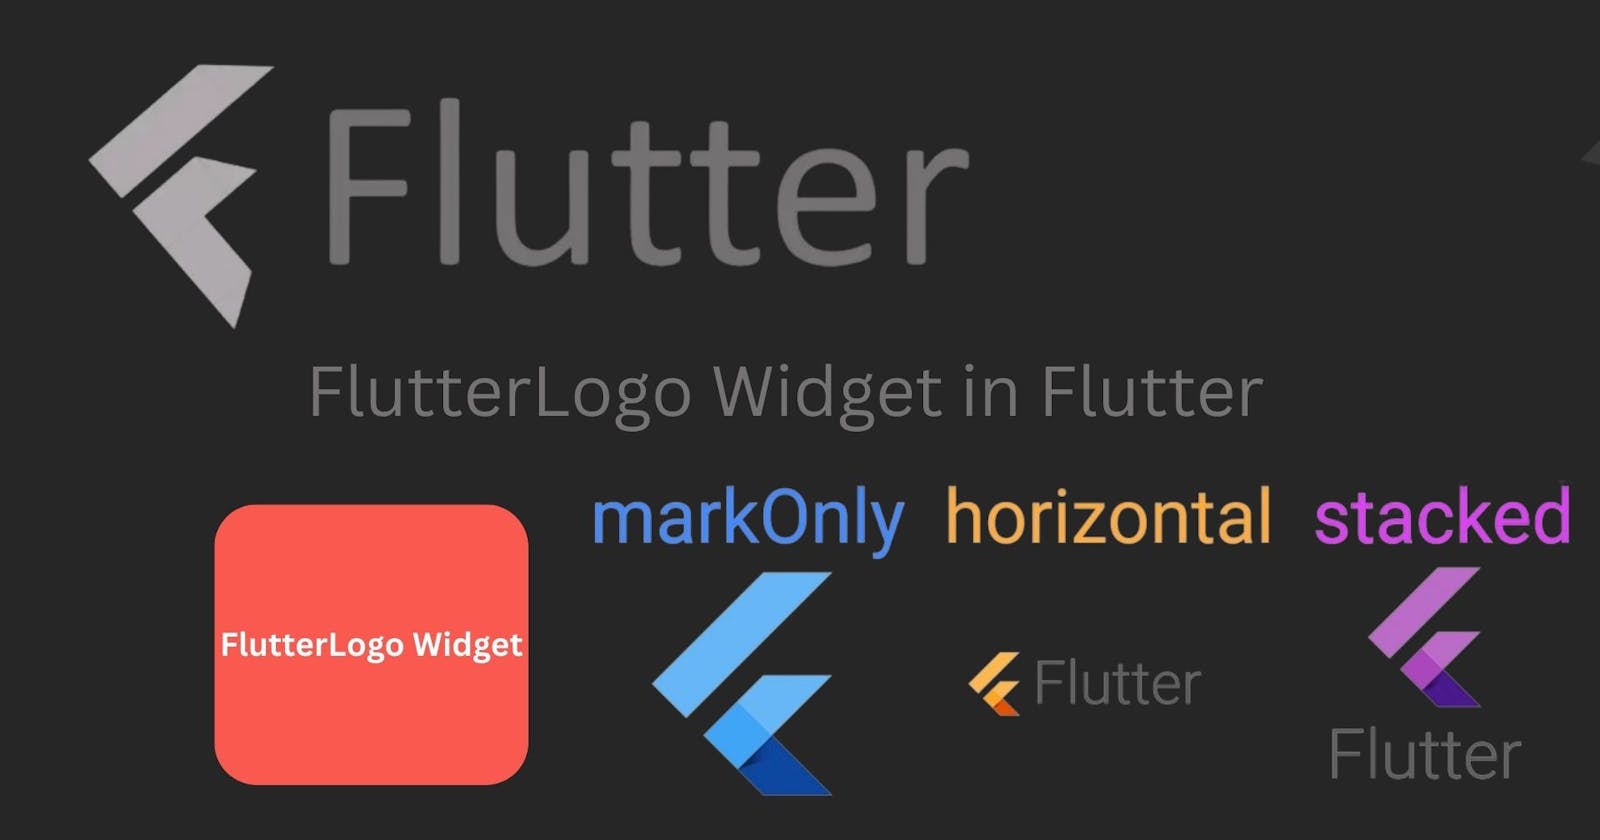 FlutterLogo Widget in Flutter